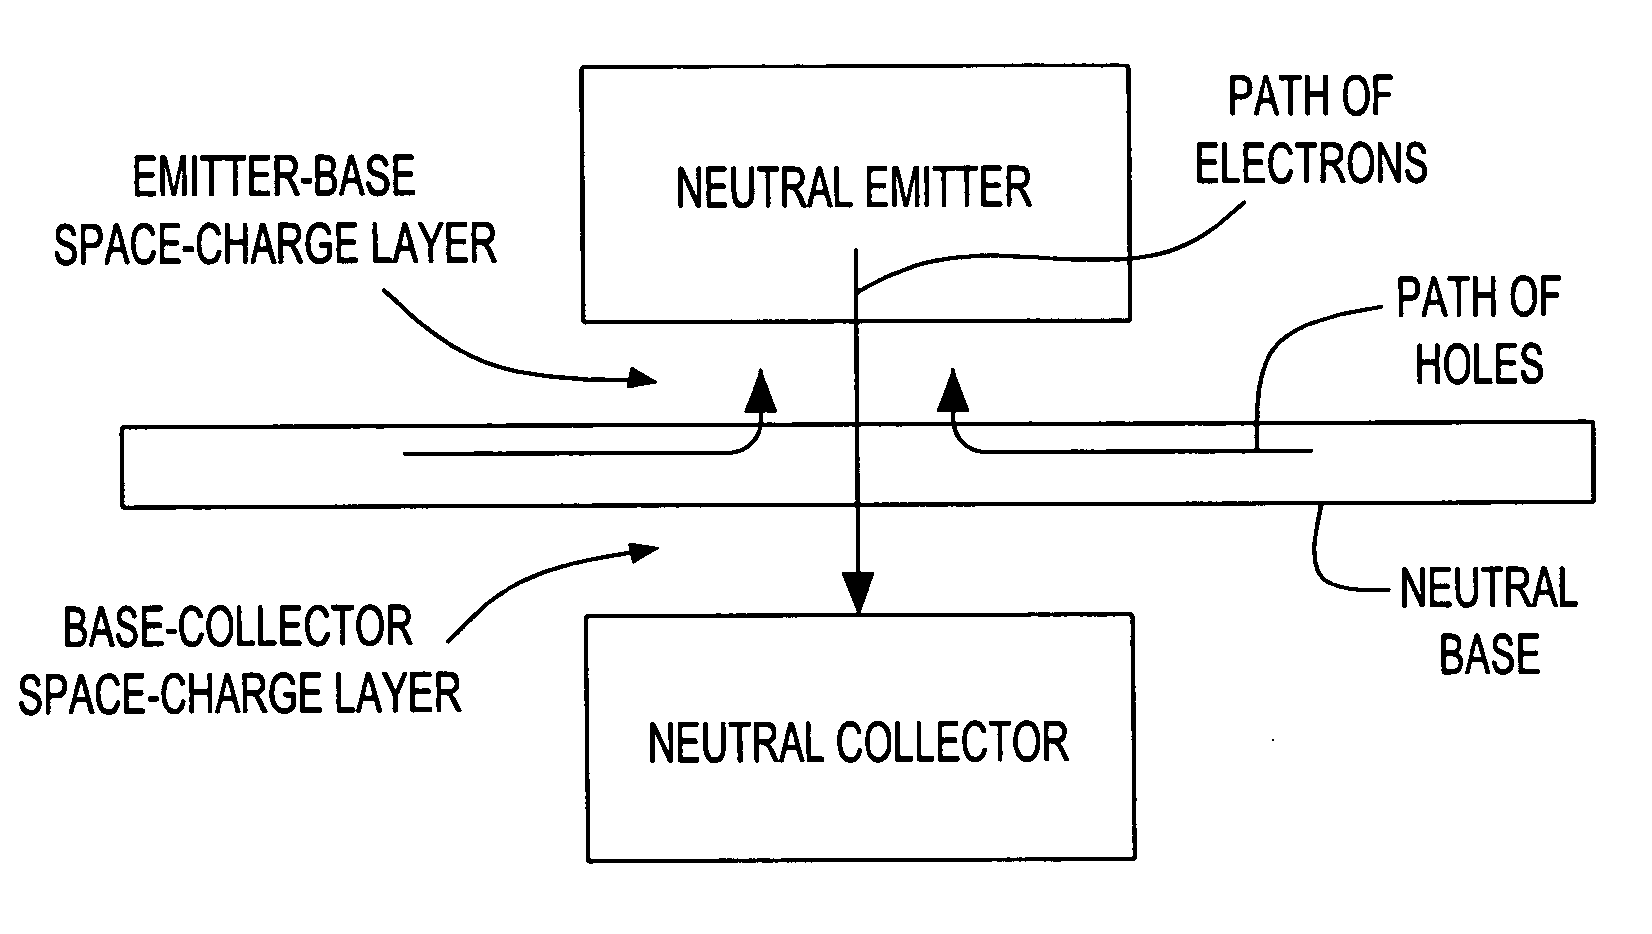 Bipolar transistor with extrinsic stress layer